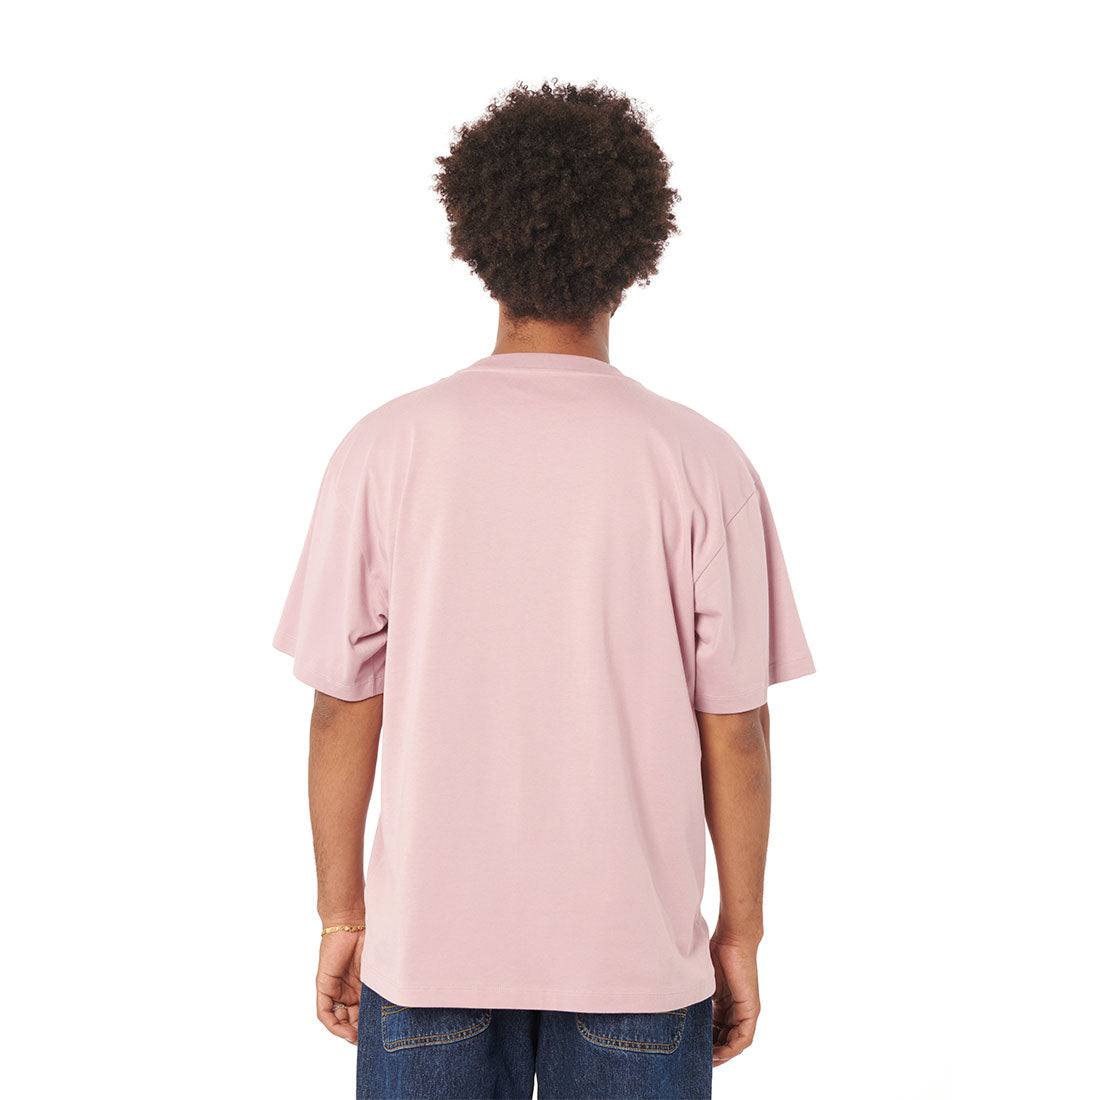 T-shirt a maniche corte Rassvet - Big Logo Tee-Rosa